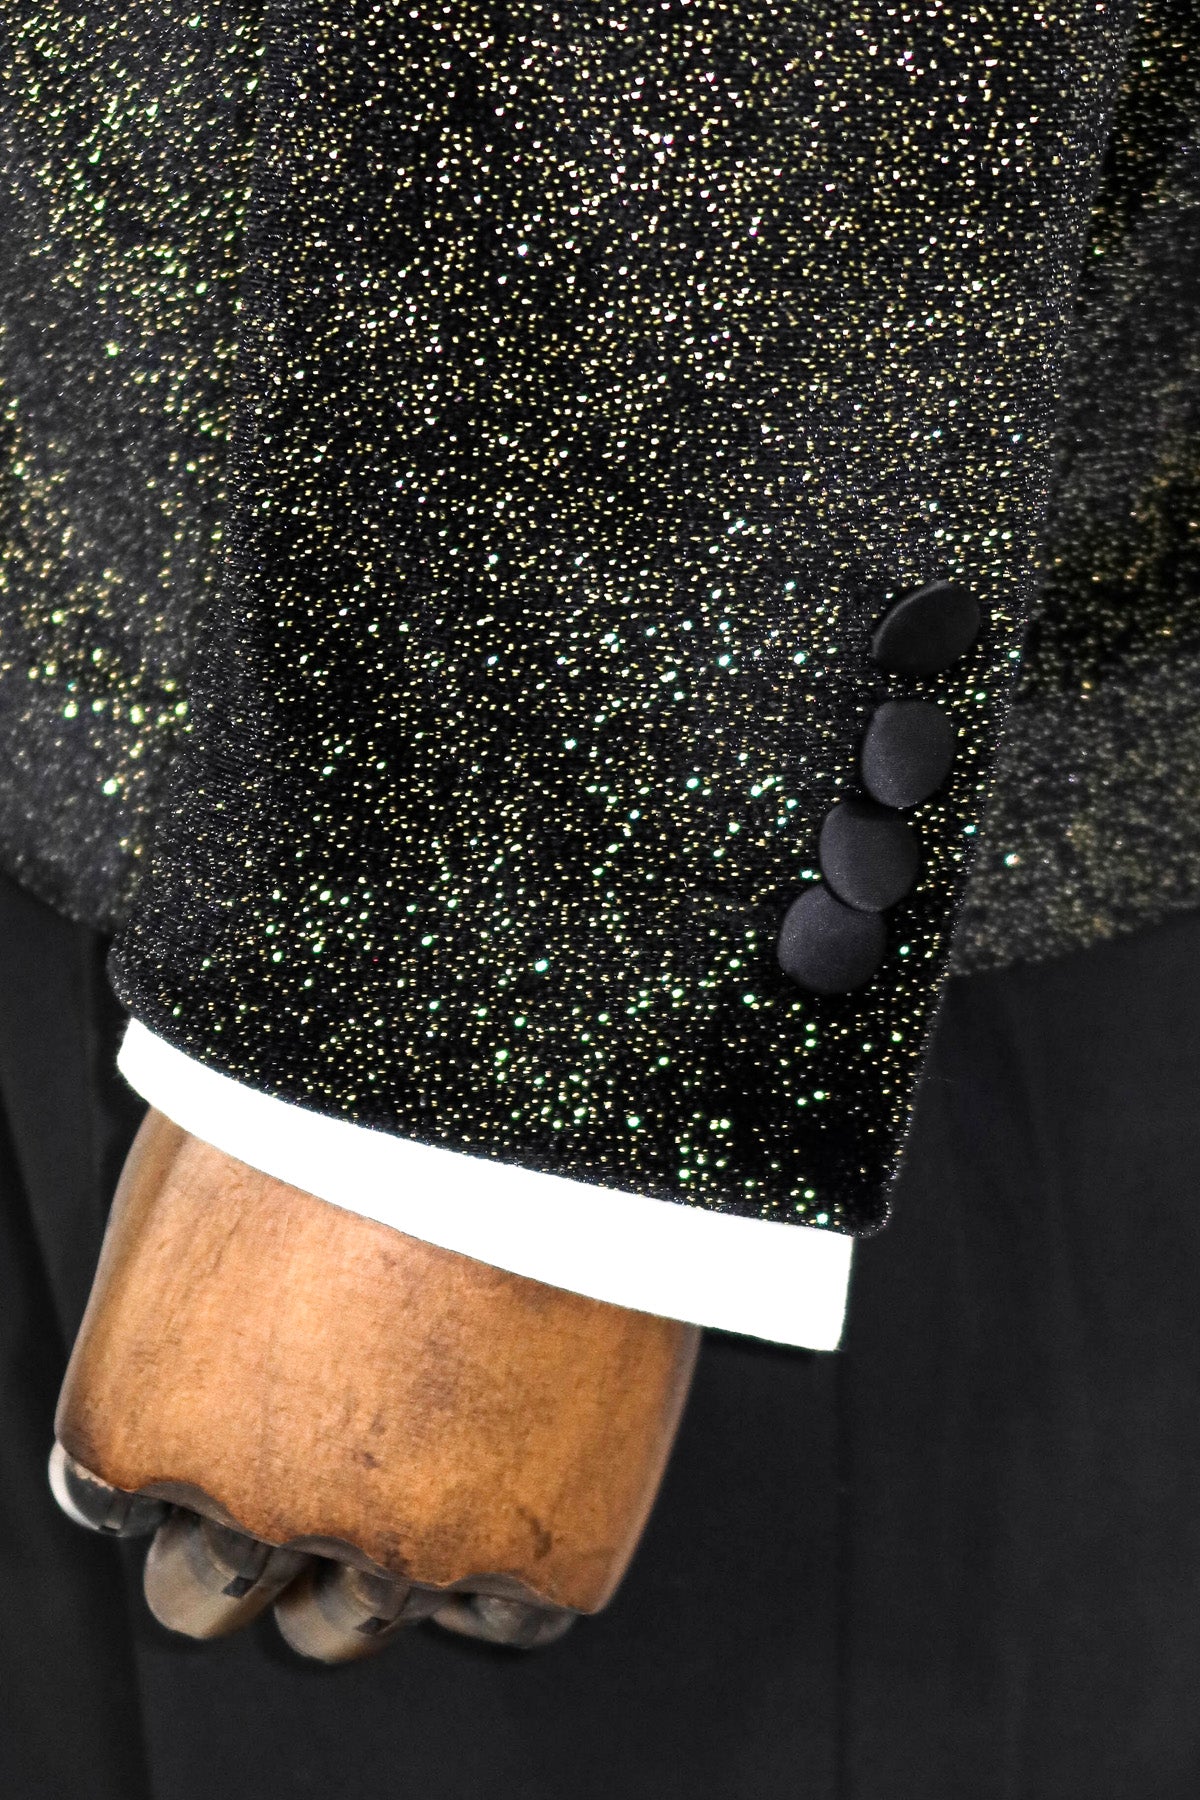 KCT Menswear - Velvet Black Glitter Gold Blazer with Shawl Lapel 